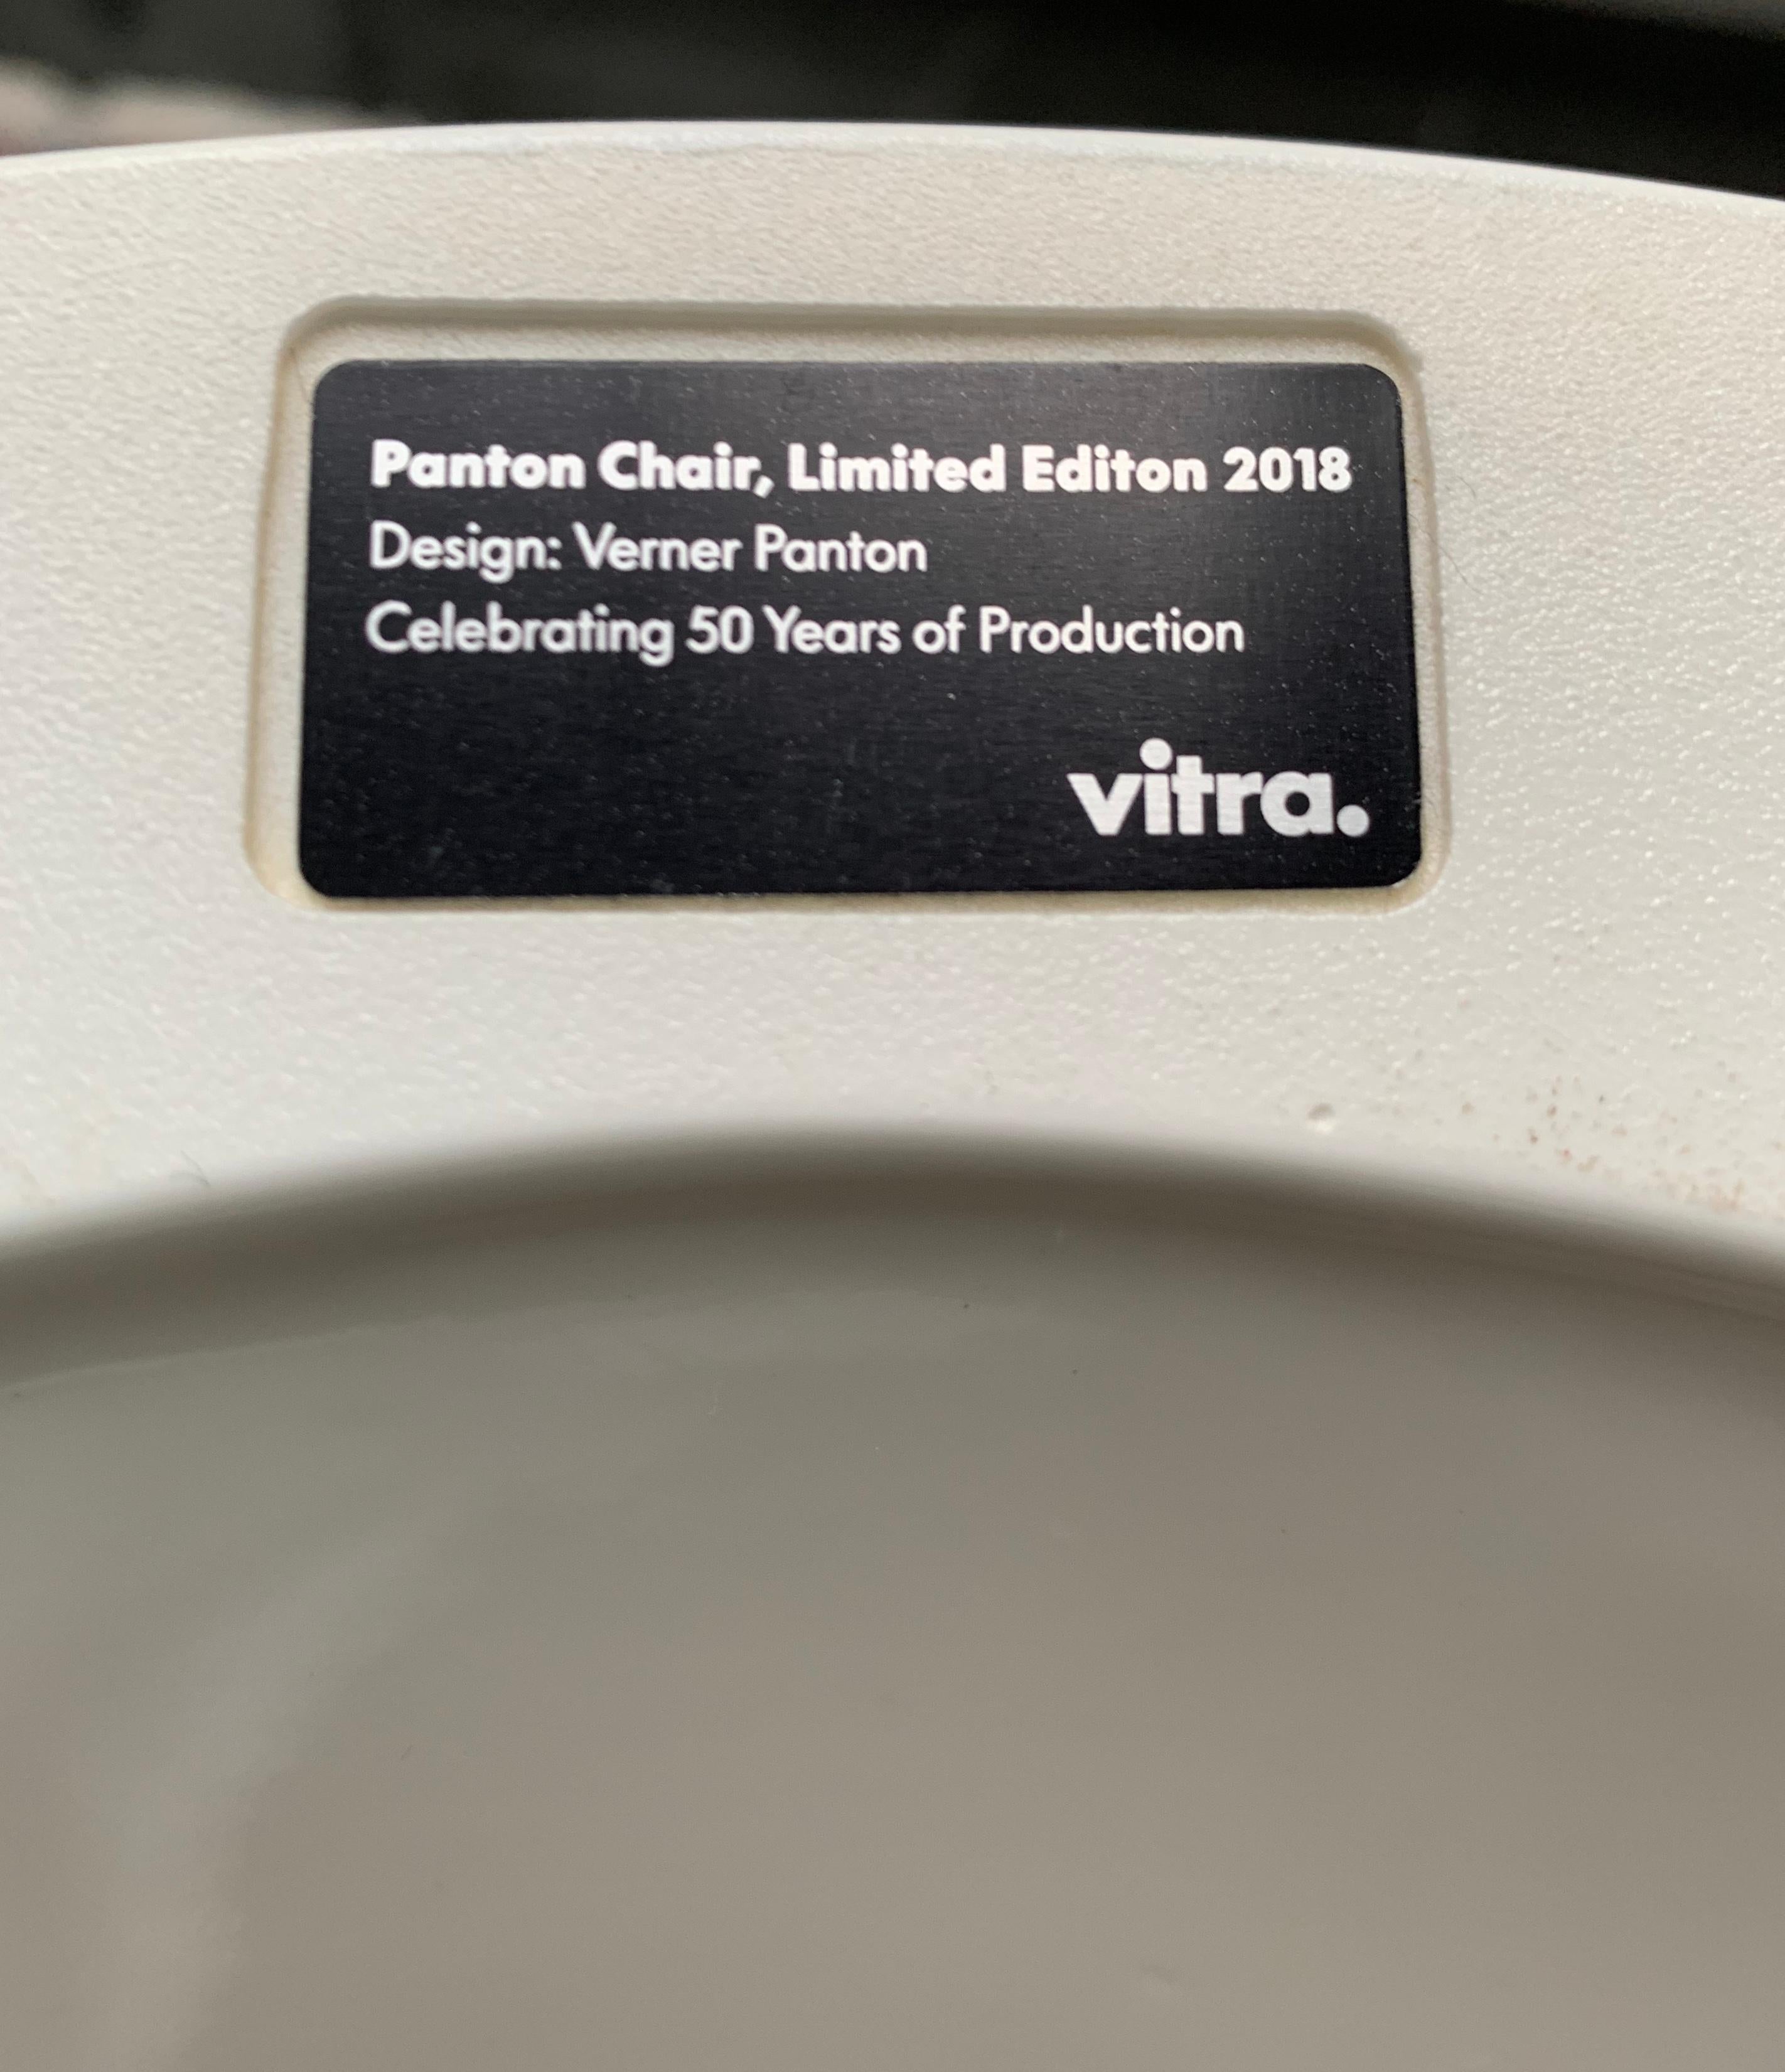 Vitra Verner Panton 'Panton Glow', 2018 Limited Edition 8